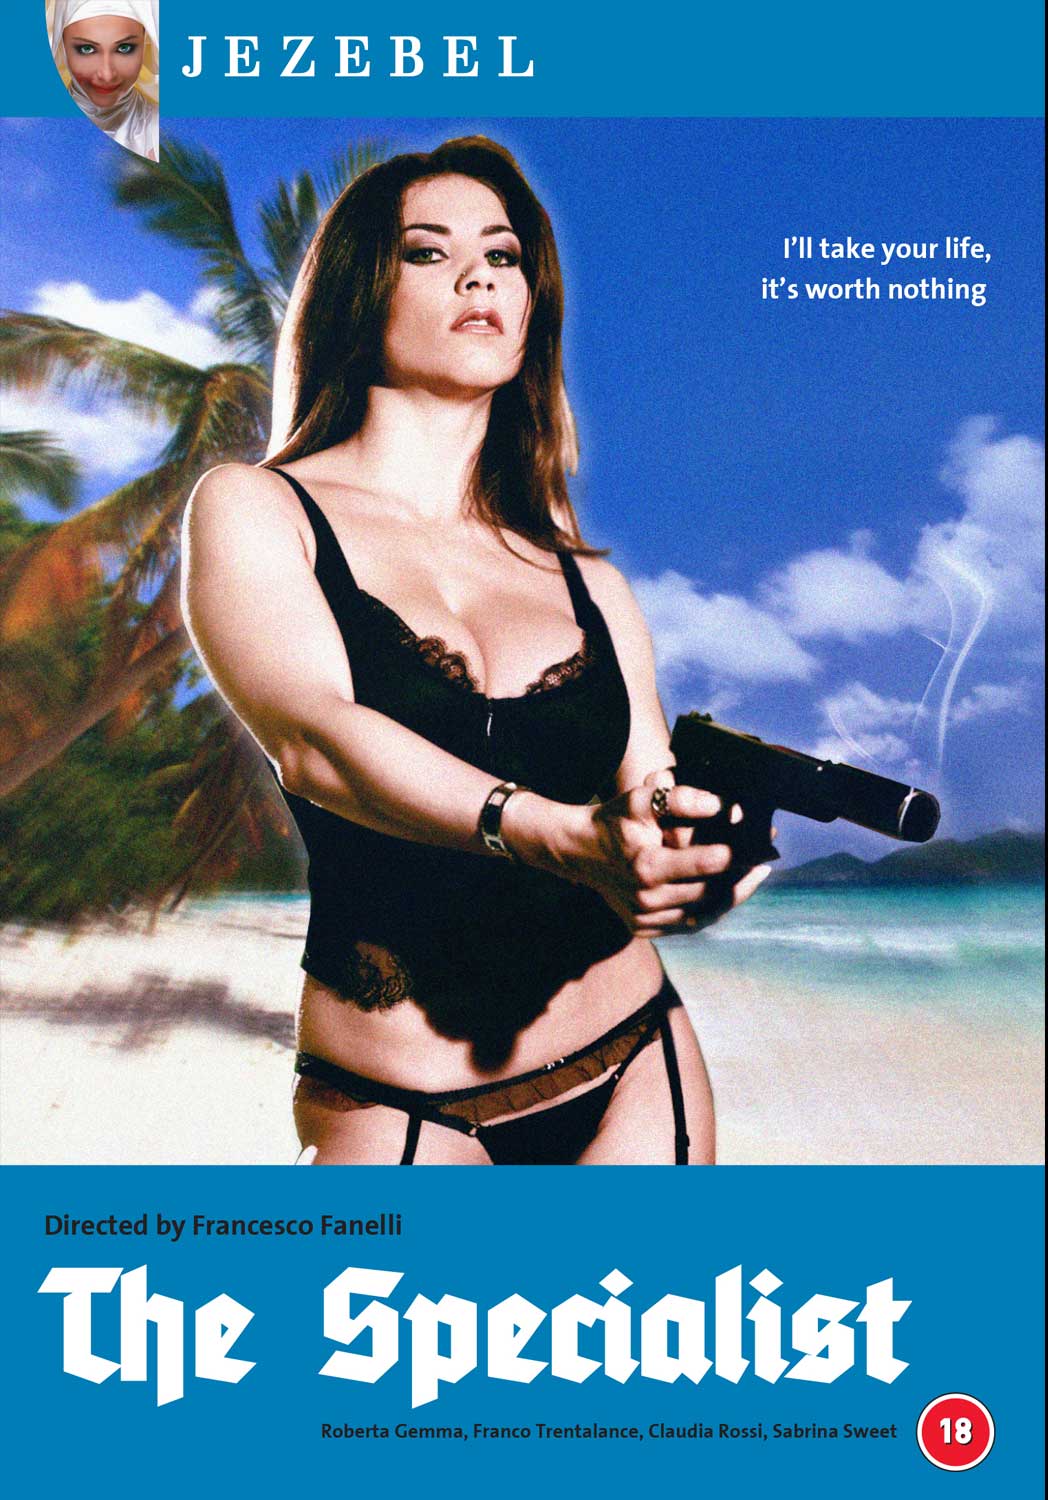 Erotic crime thriller from Francesco Fanelli - starring Roberta Gemma! Stream now on Redemption TV's Jezebel label